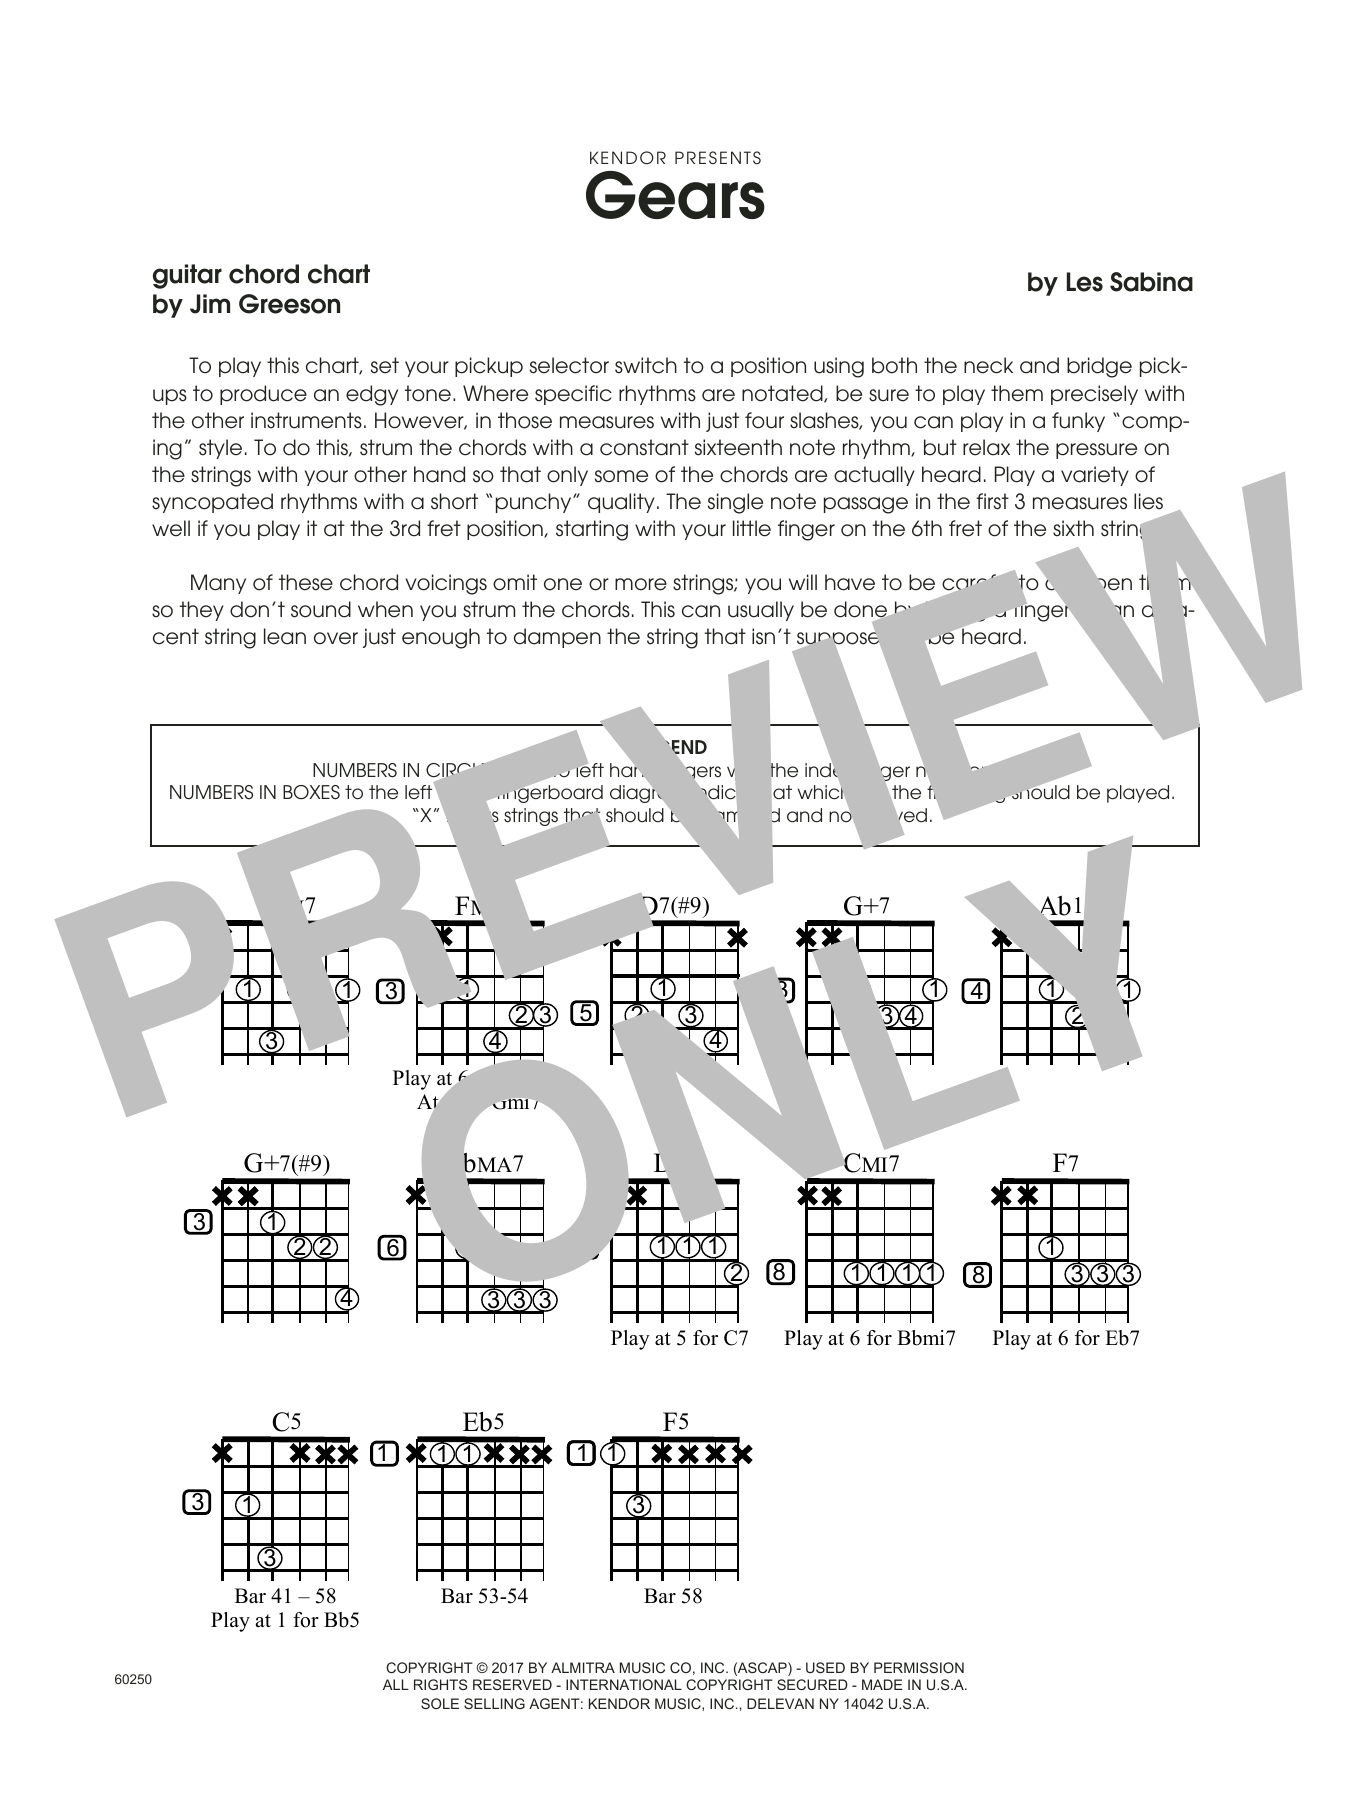 Download Les Sabina Gears - Guitar Chord Chart Sheet Music